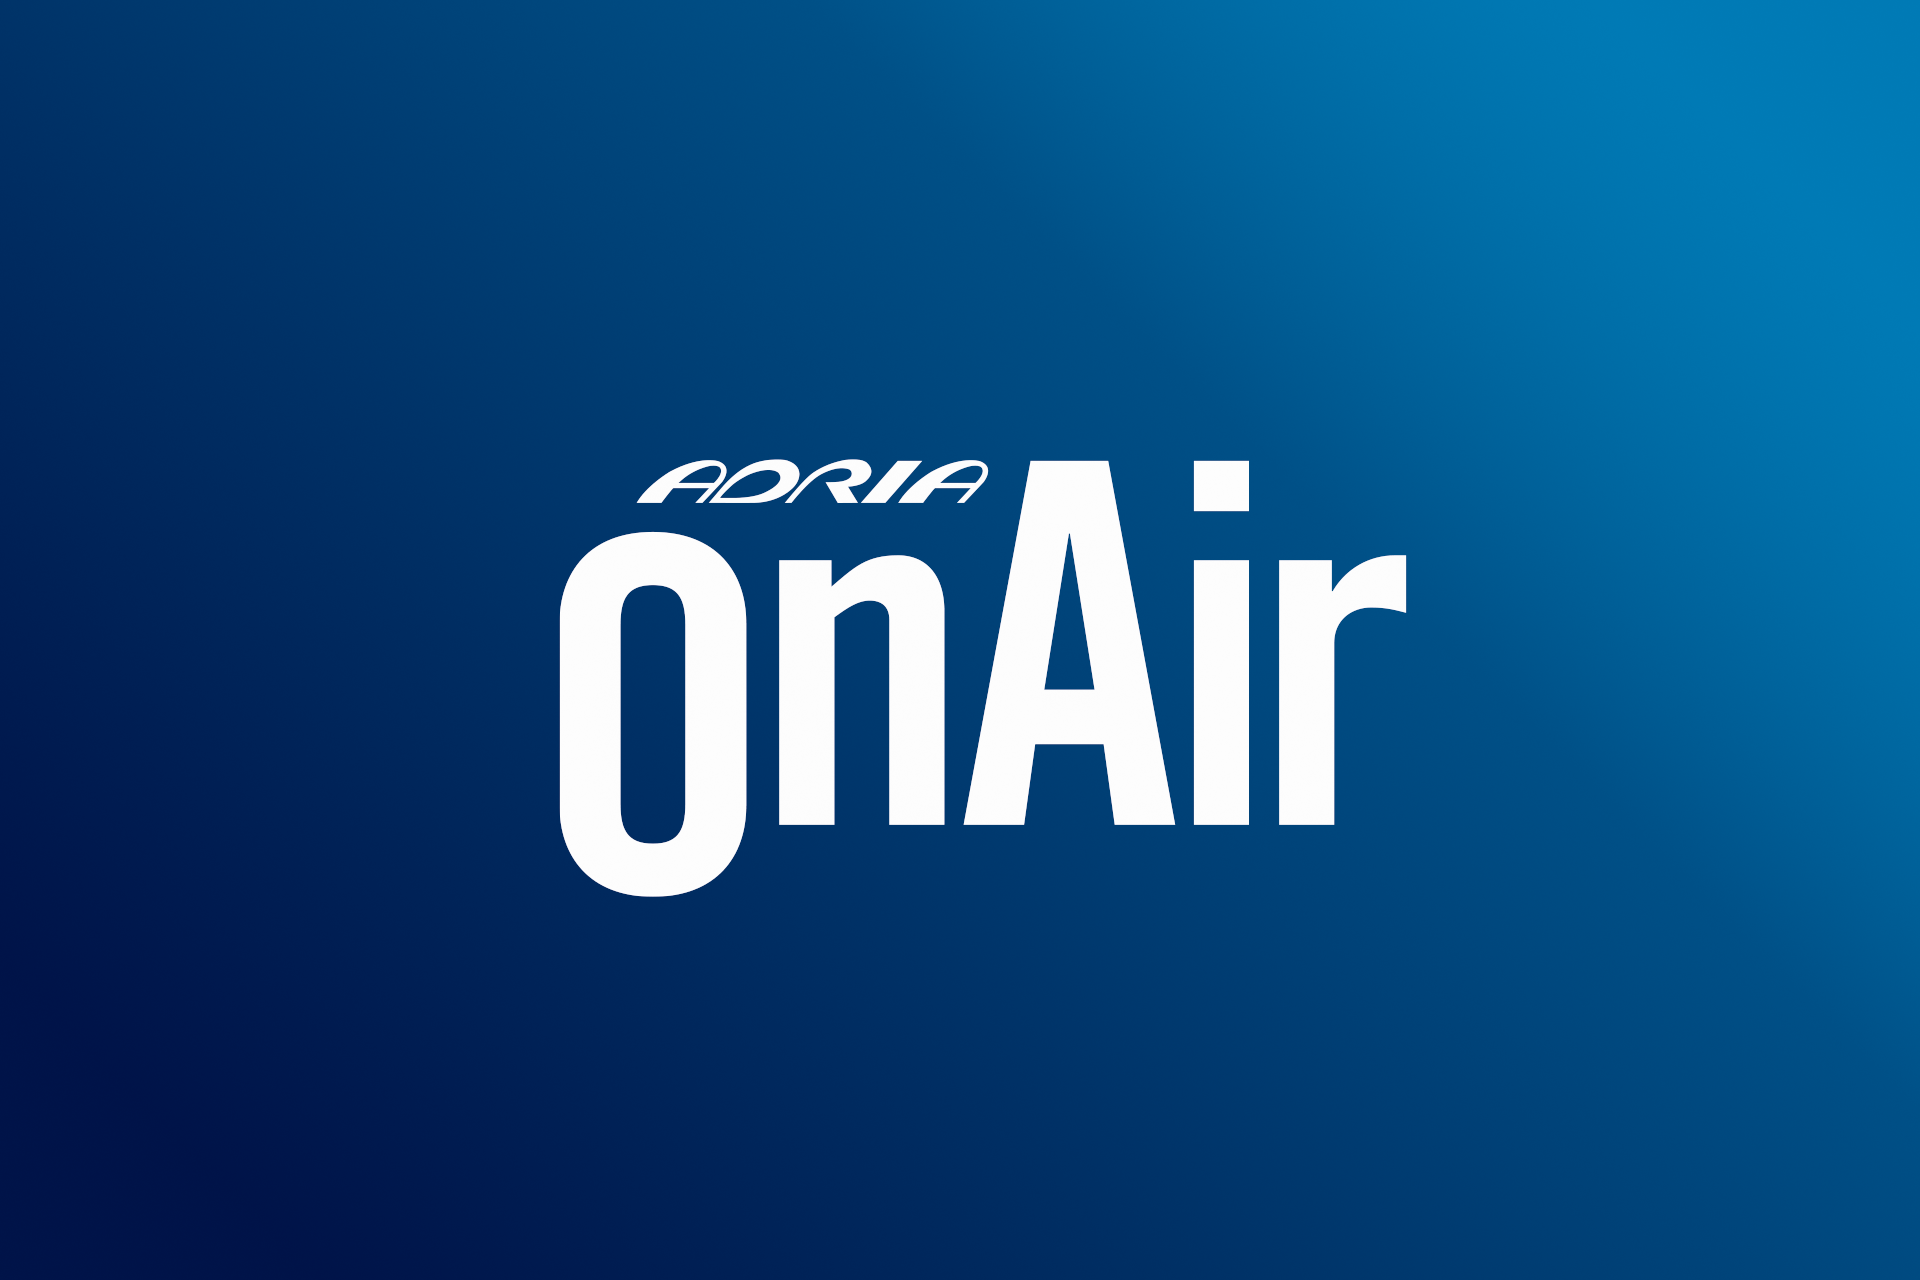 Adria OnAir logotip